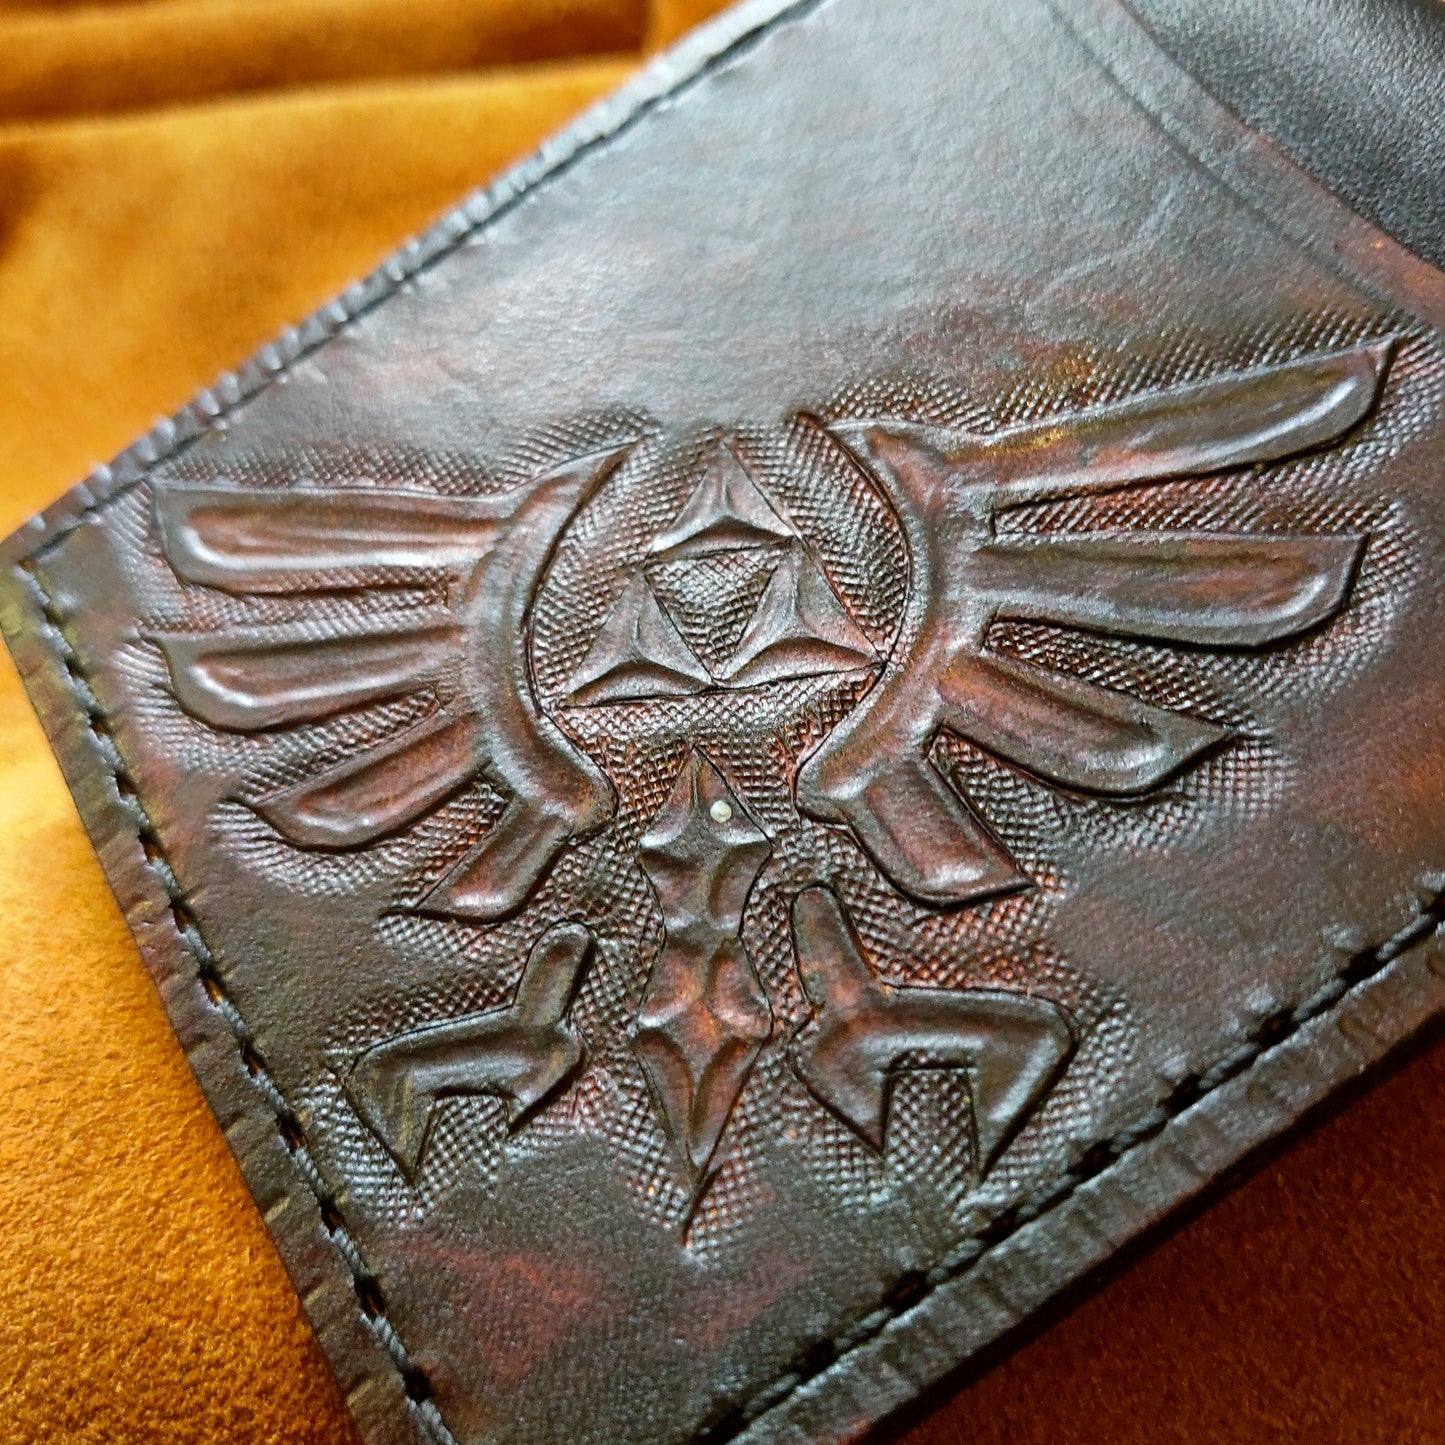 Double Hyrule Crest leather wallet- Dark Brown version - Leather Bifold Wallet - Handcrafted Legend of Zelda Wallet - Link Wallet